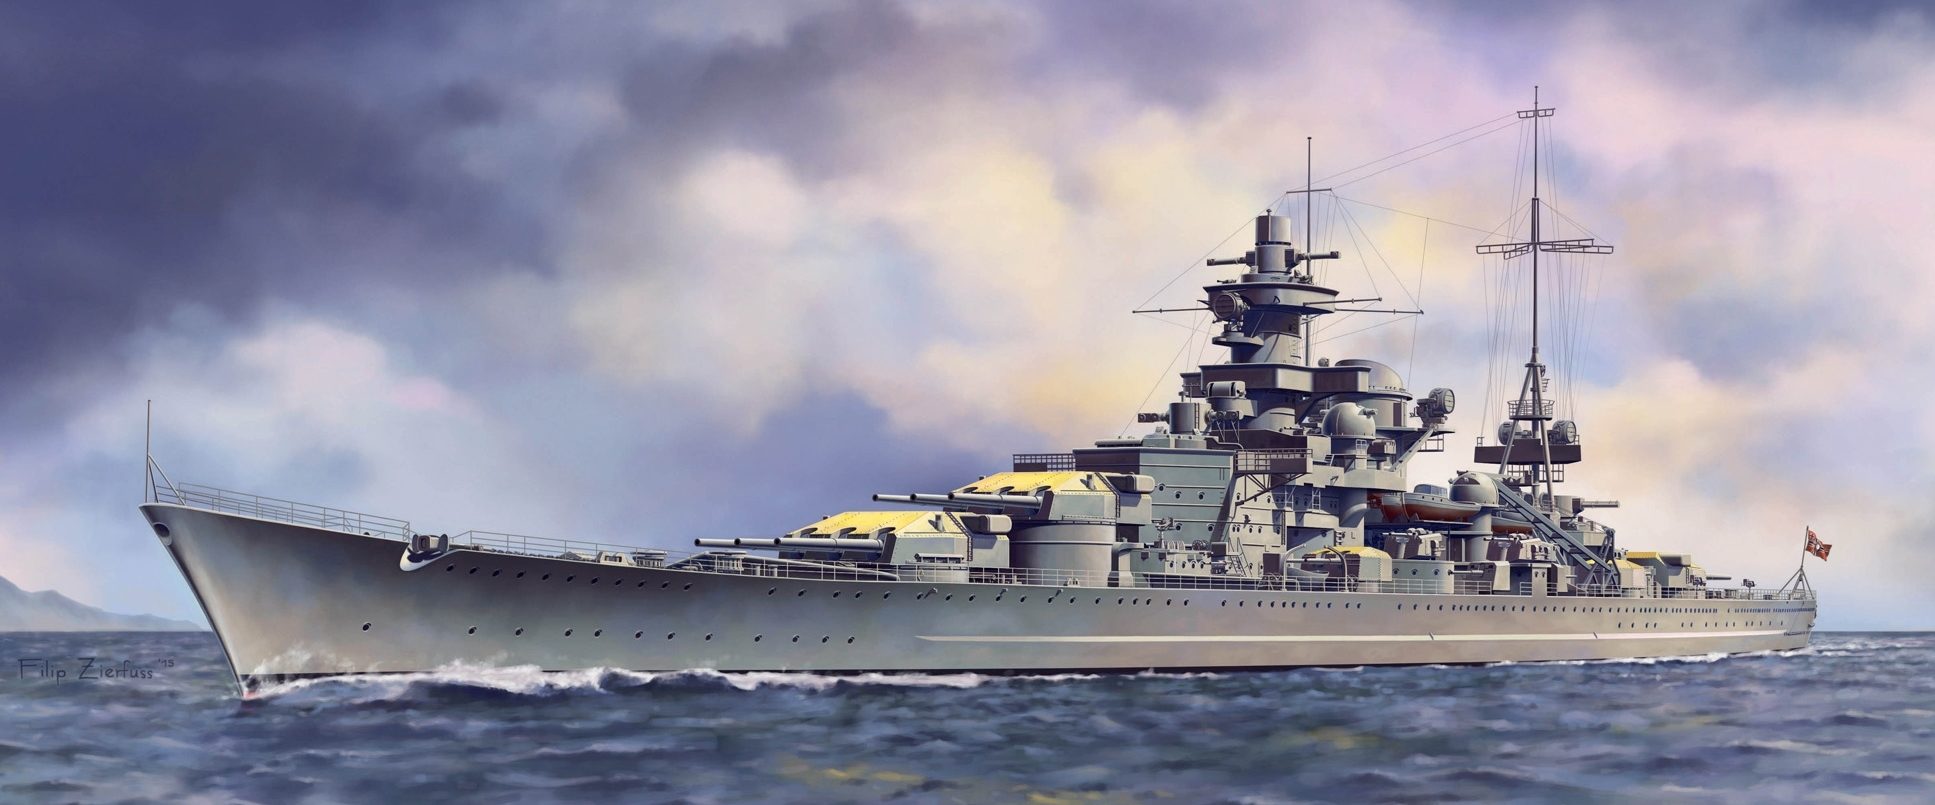 Zierfuss Filip. Линкор Scharnhorst.